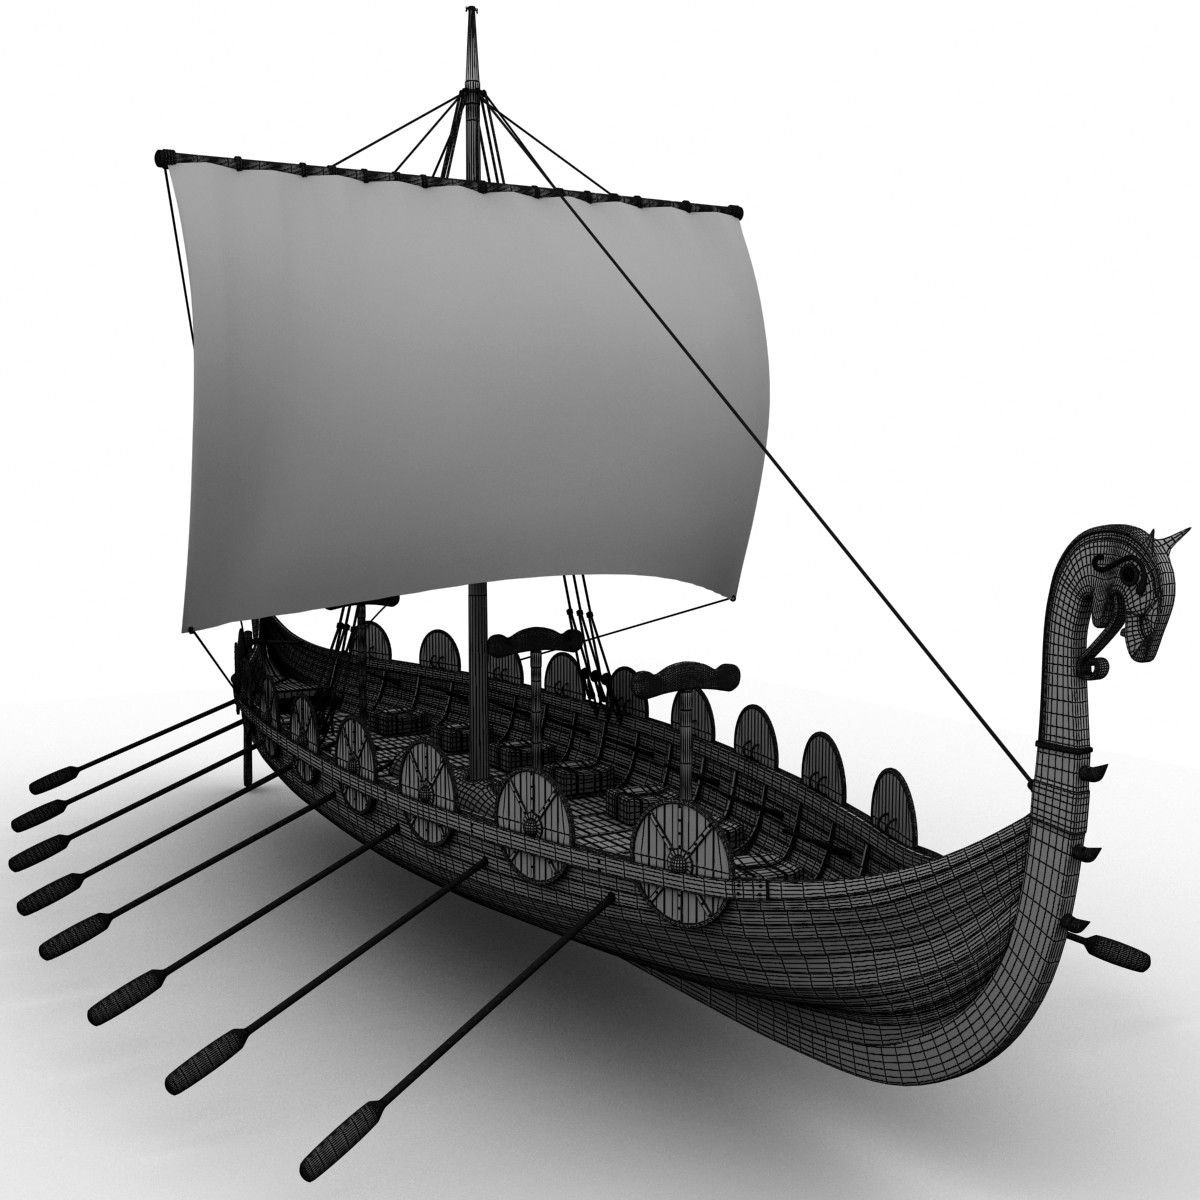 Тема ладья. Ладья Драккар викингов. Модель корабля Viking ship (корабль викингов). Ладья Драккар викингов каркас. Боевой корабль викингов Драккар.